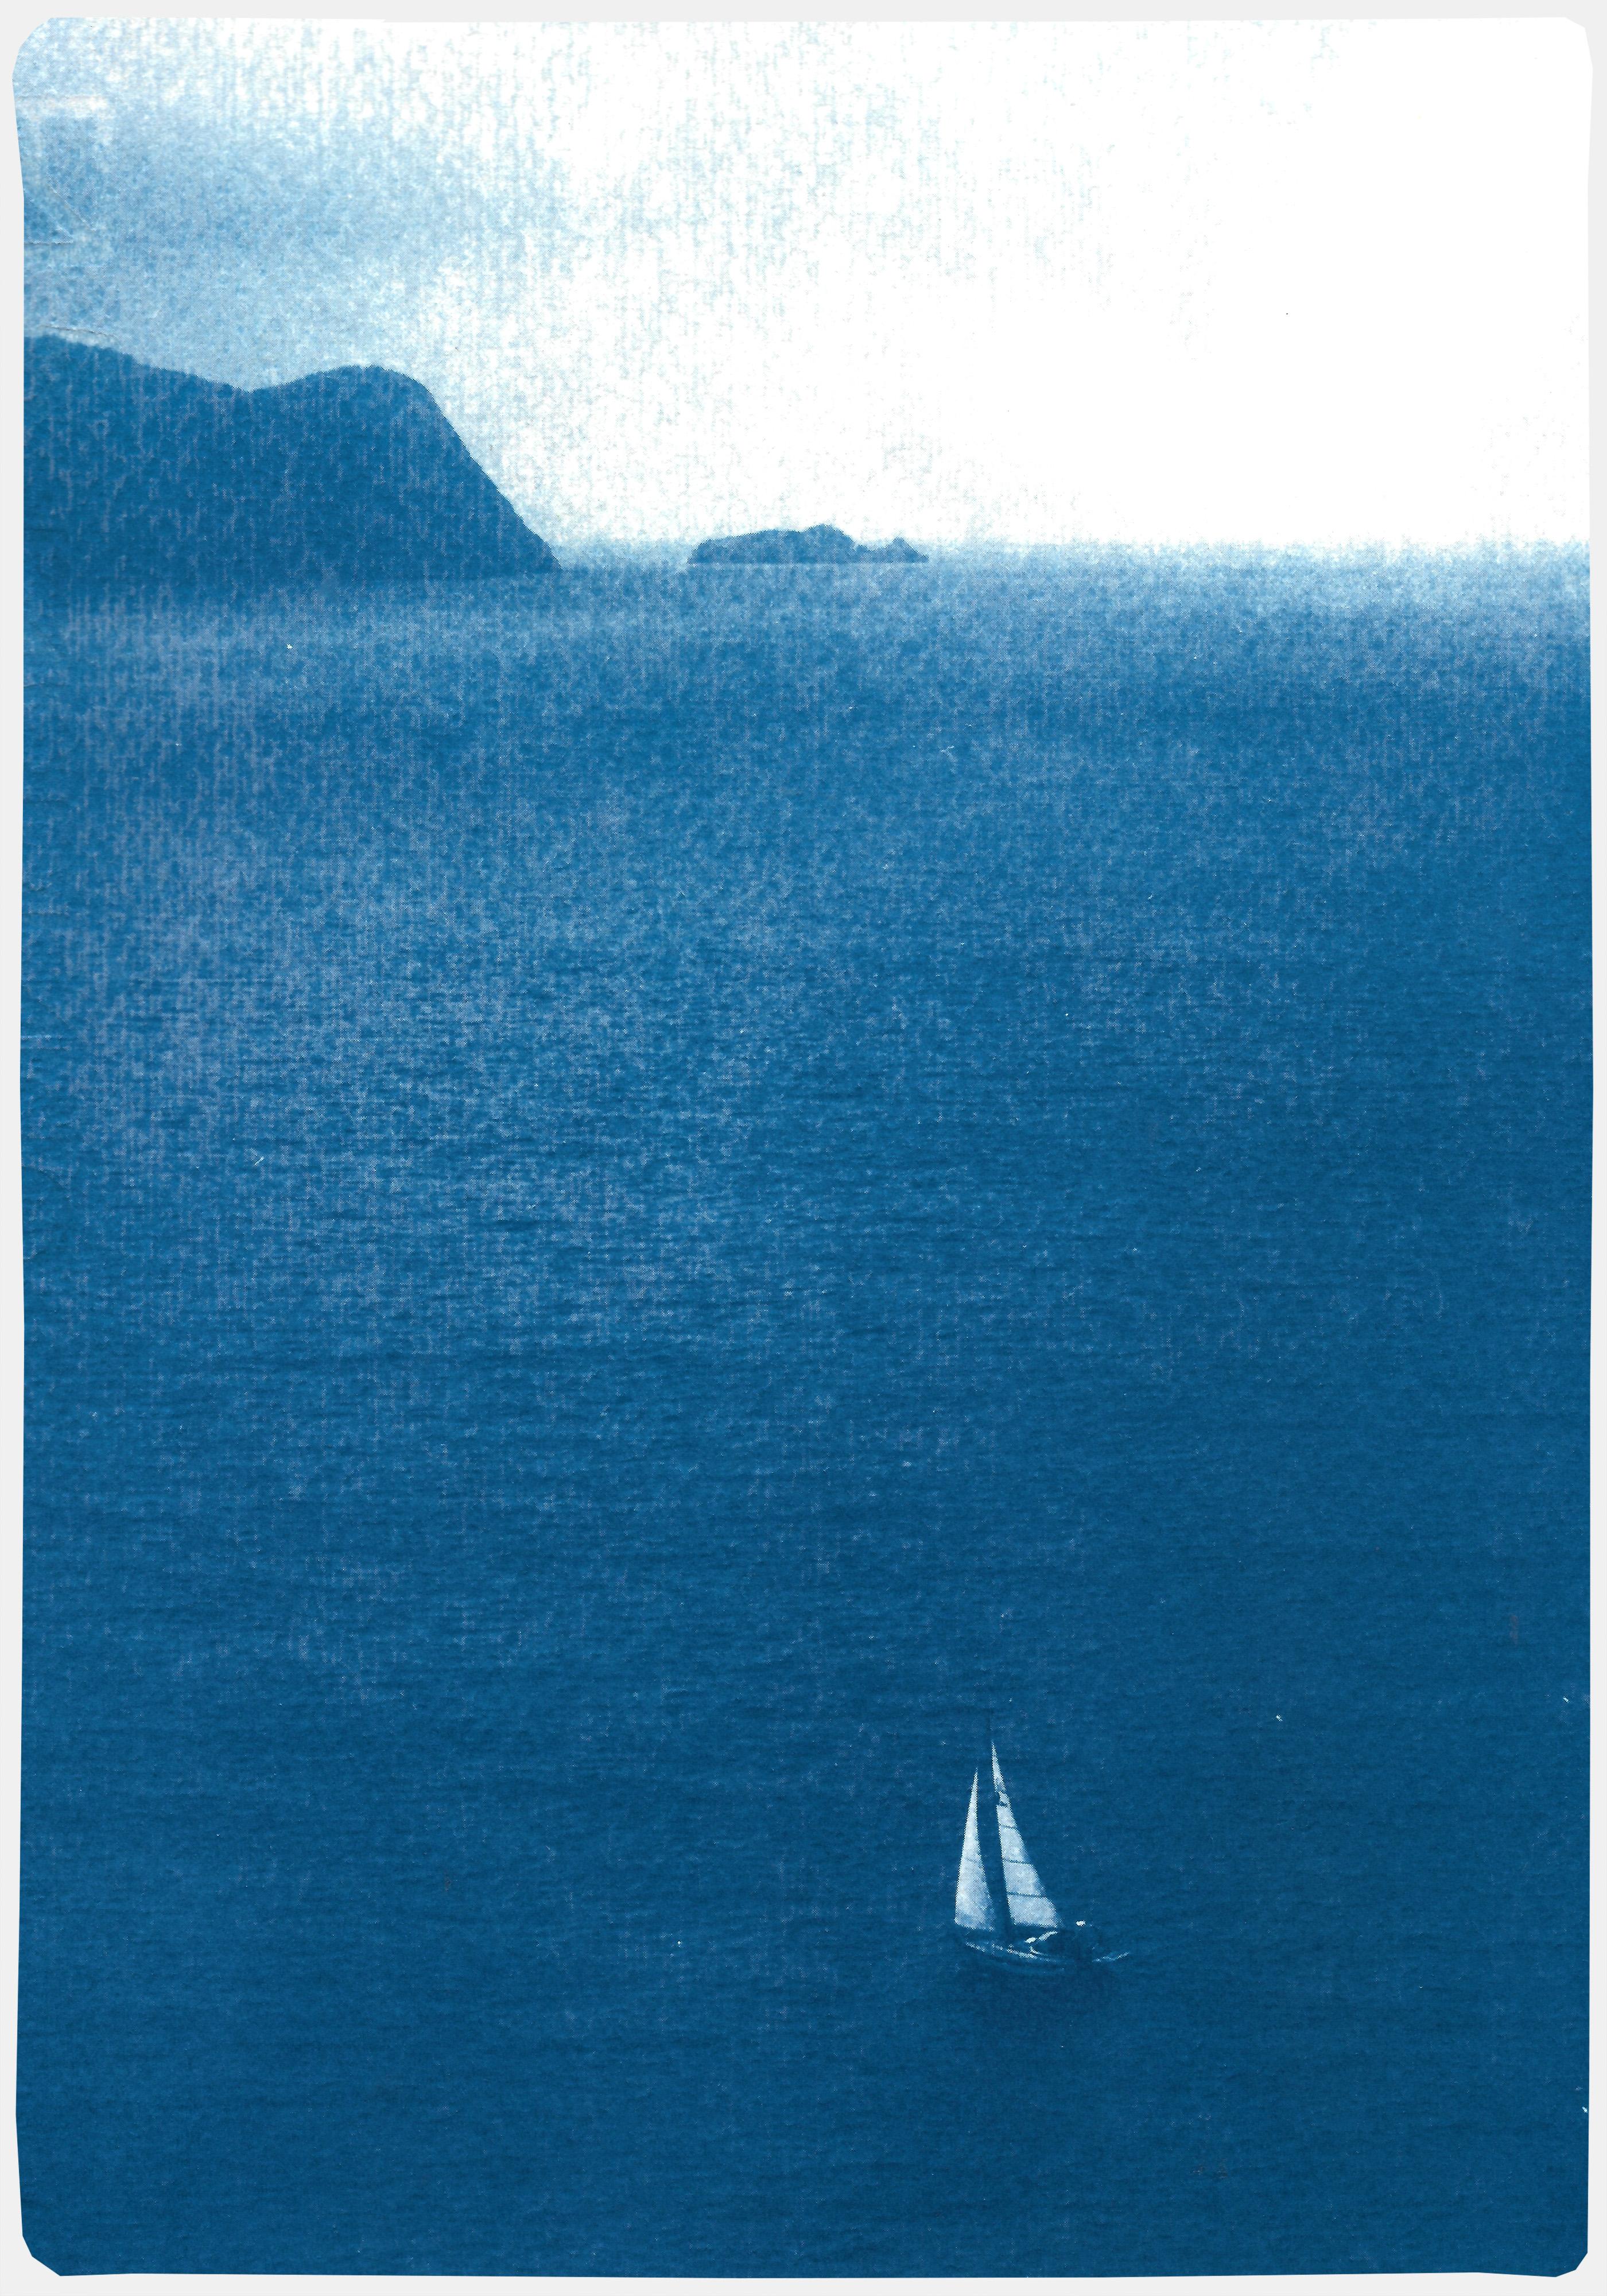 Kind of Cyan Landscape Art - Sailboat Journey, Nautical Cyanotype Print on Watercolor Paper, Indigo Seascape